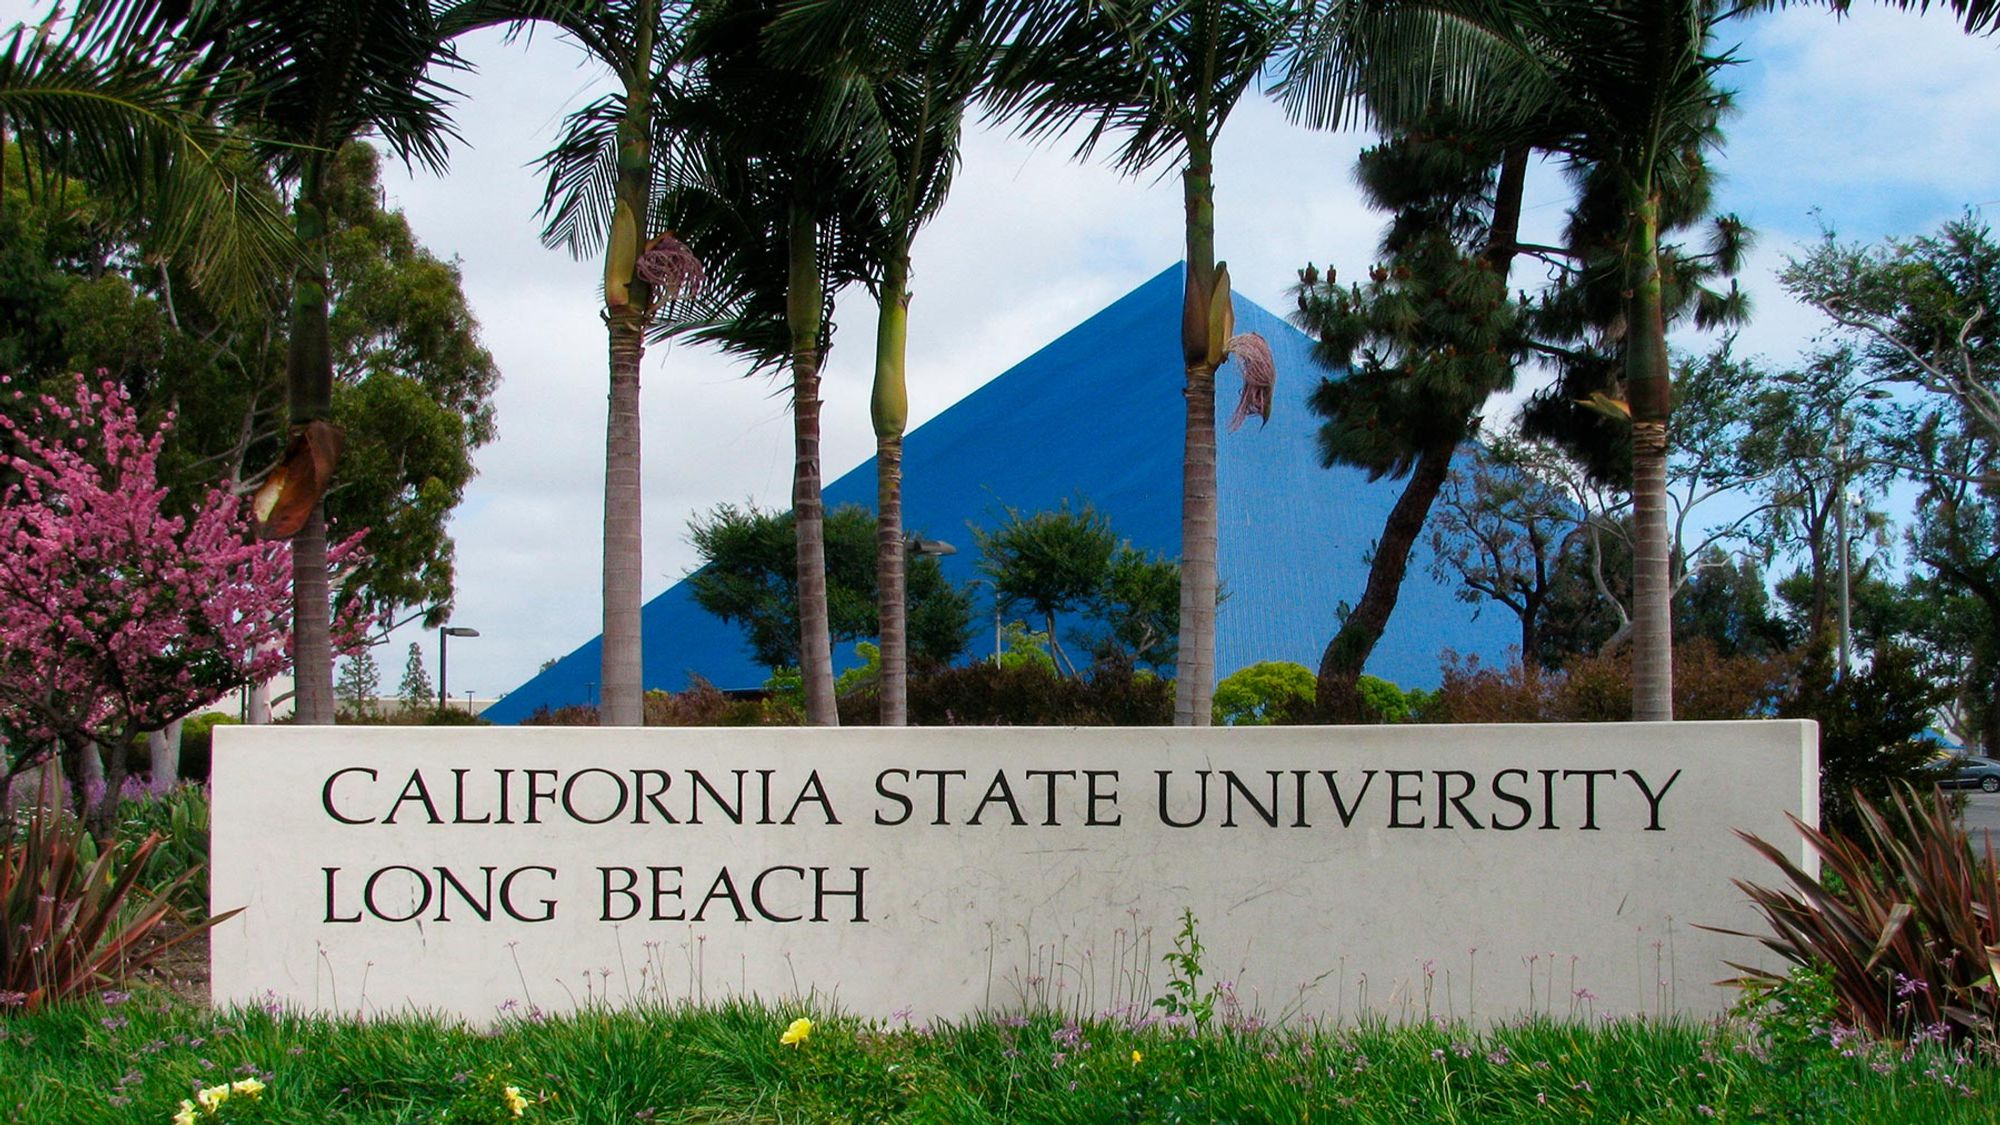 college 1546 26 11 03 hero california state university long beach sign california state university long beach 1